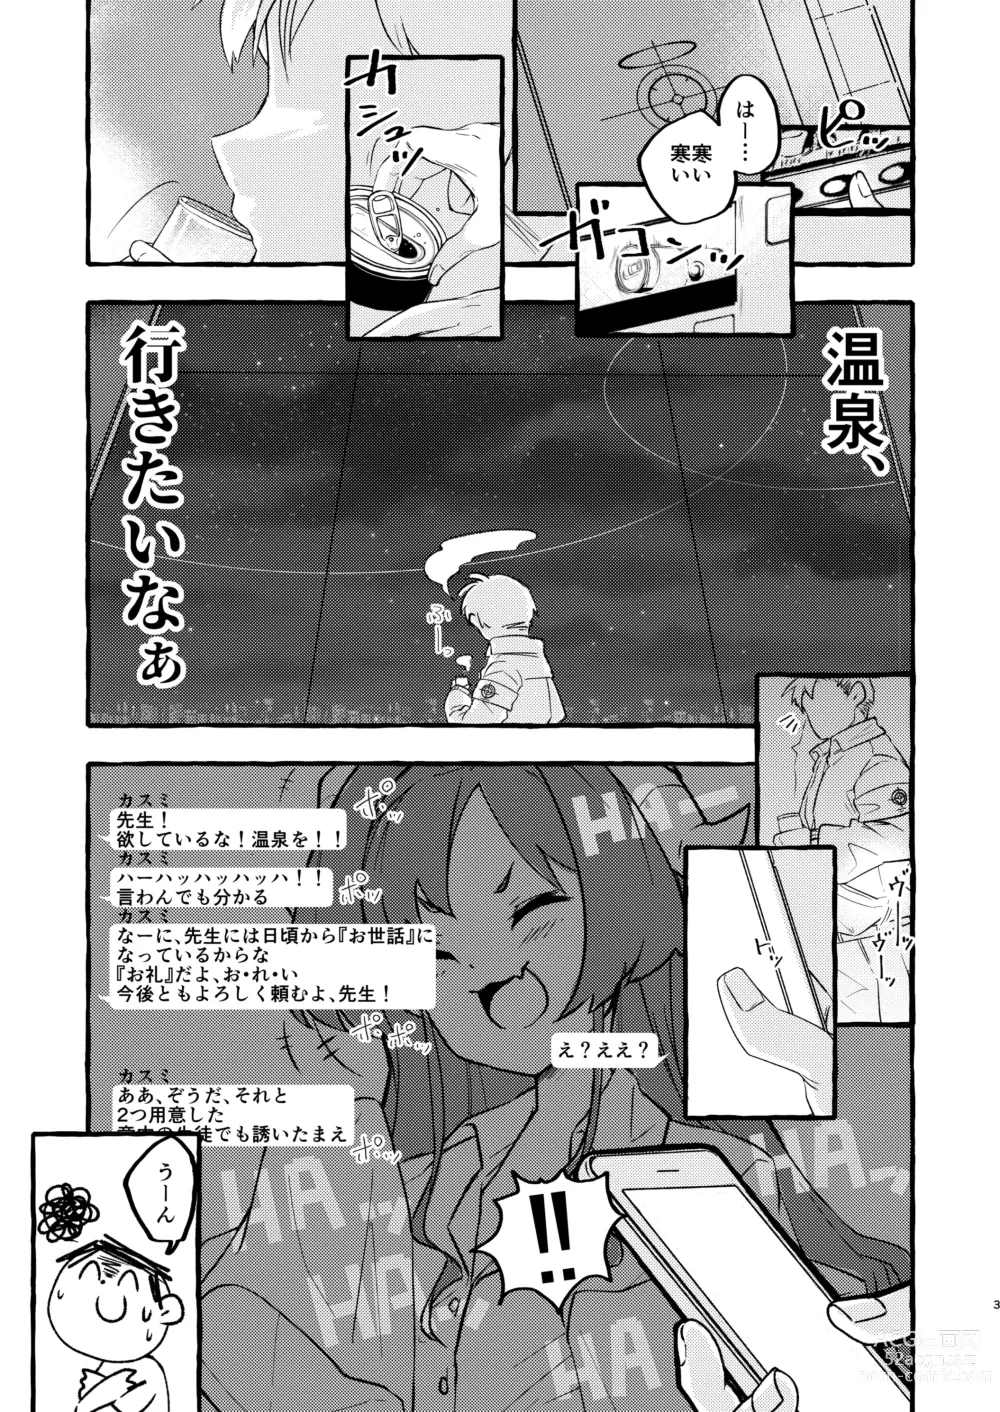 Page 2 of doujinshi Hasumi, Onsen ni Ikou ka.